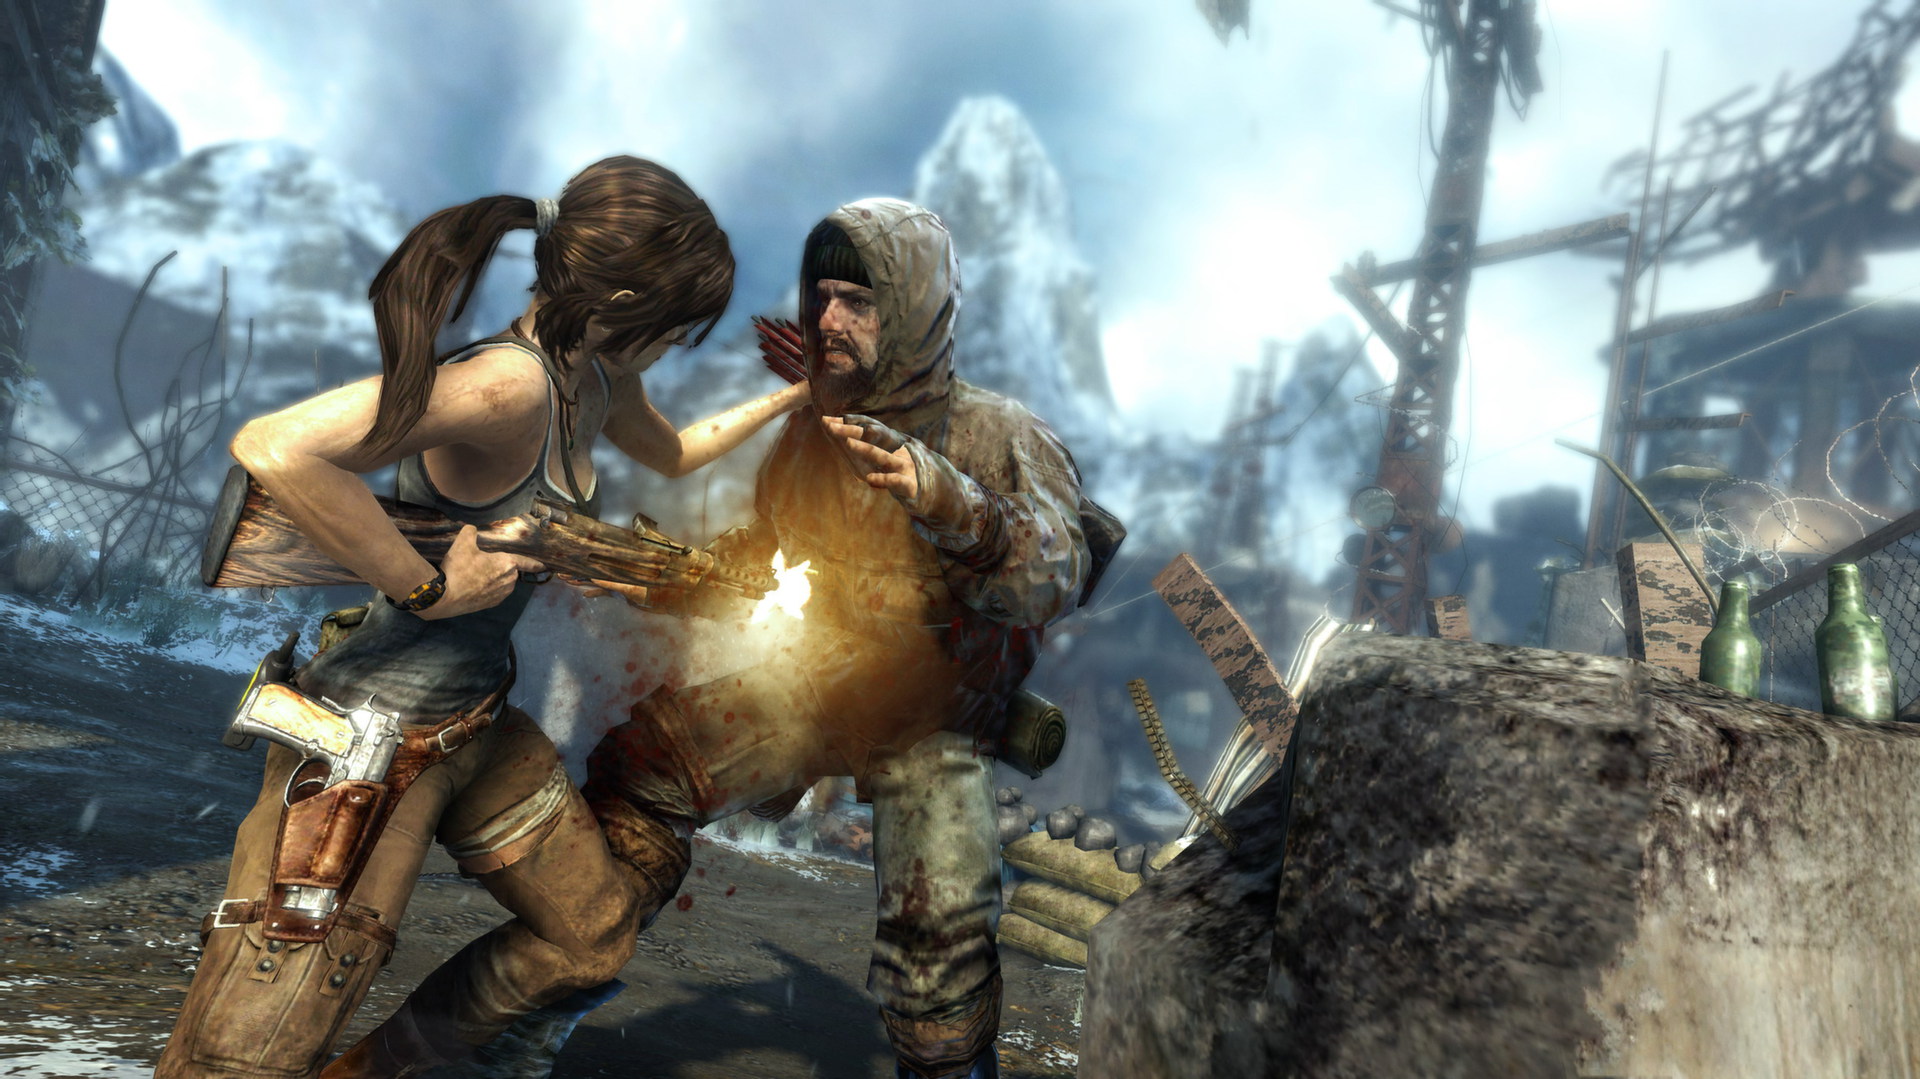 Tomb Raider (Steam key) @ RU